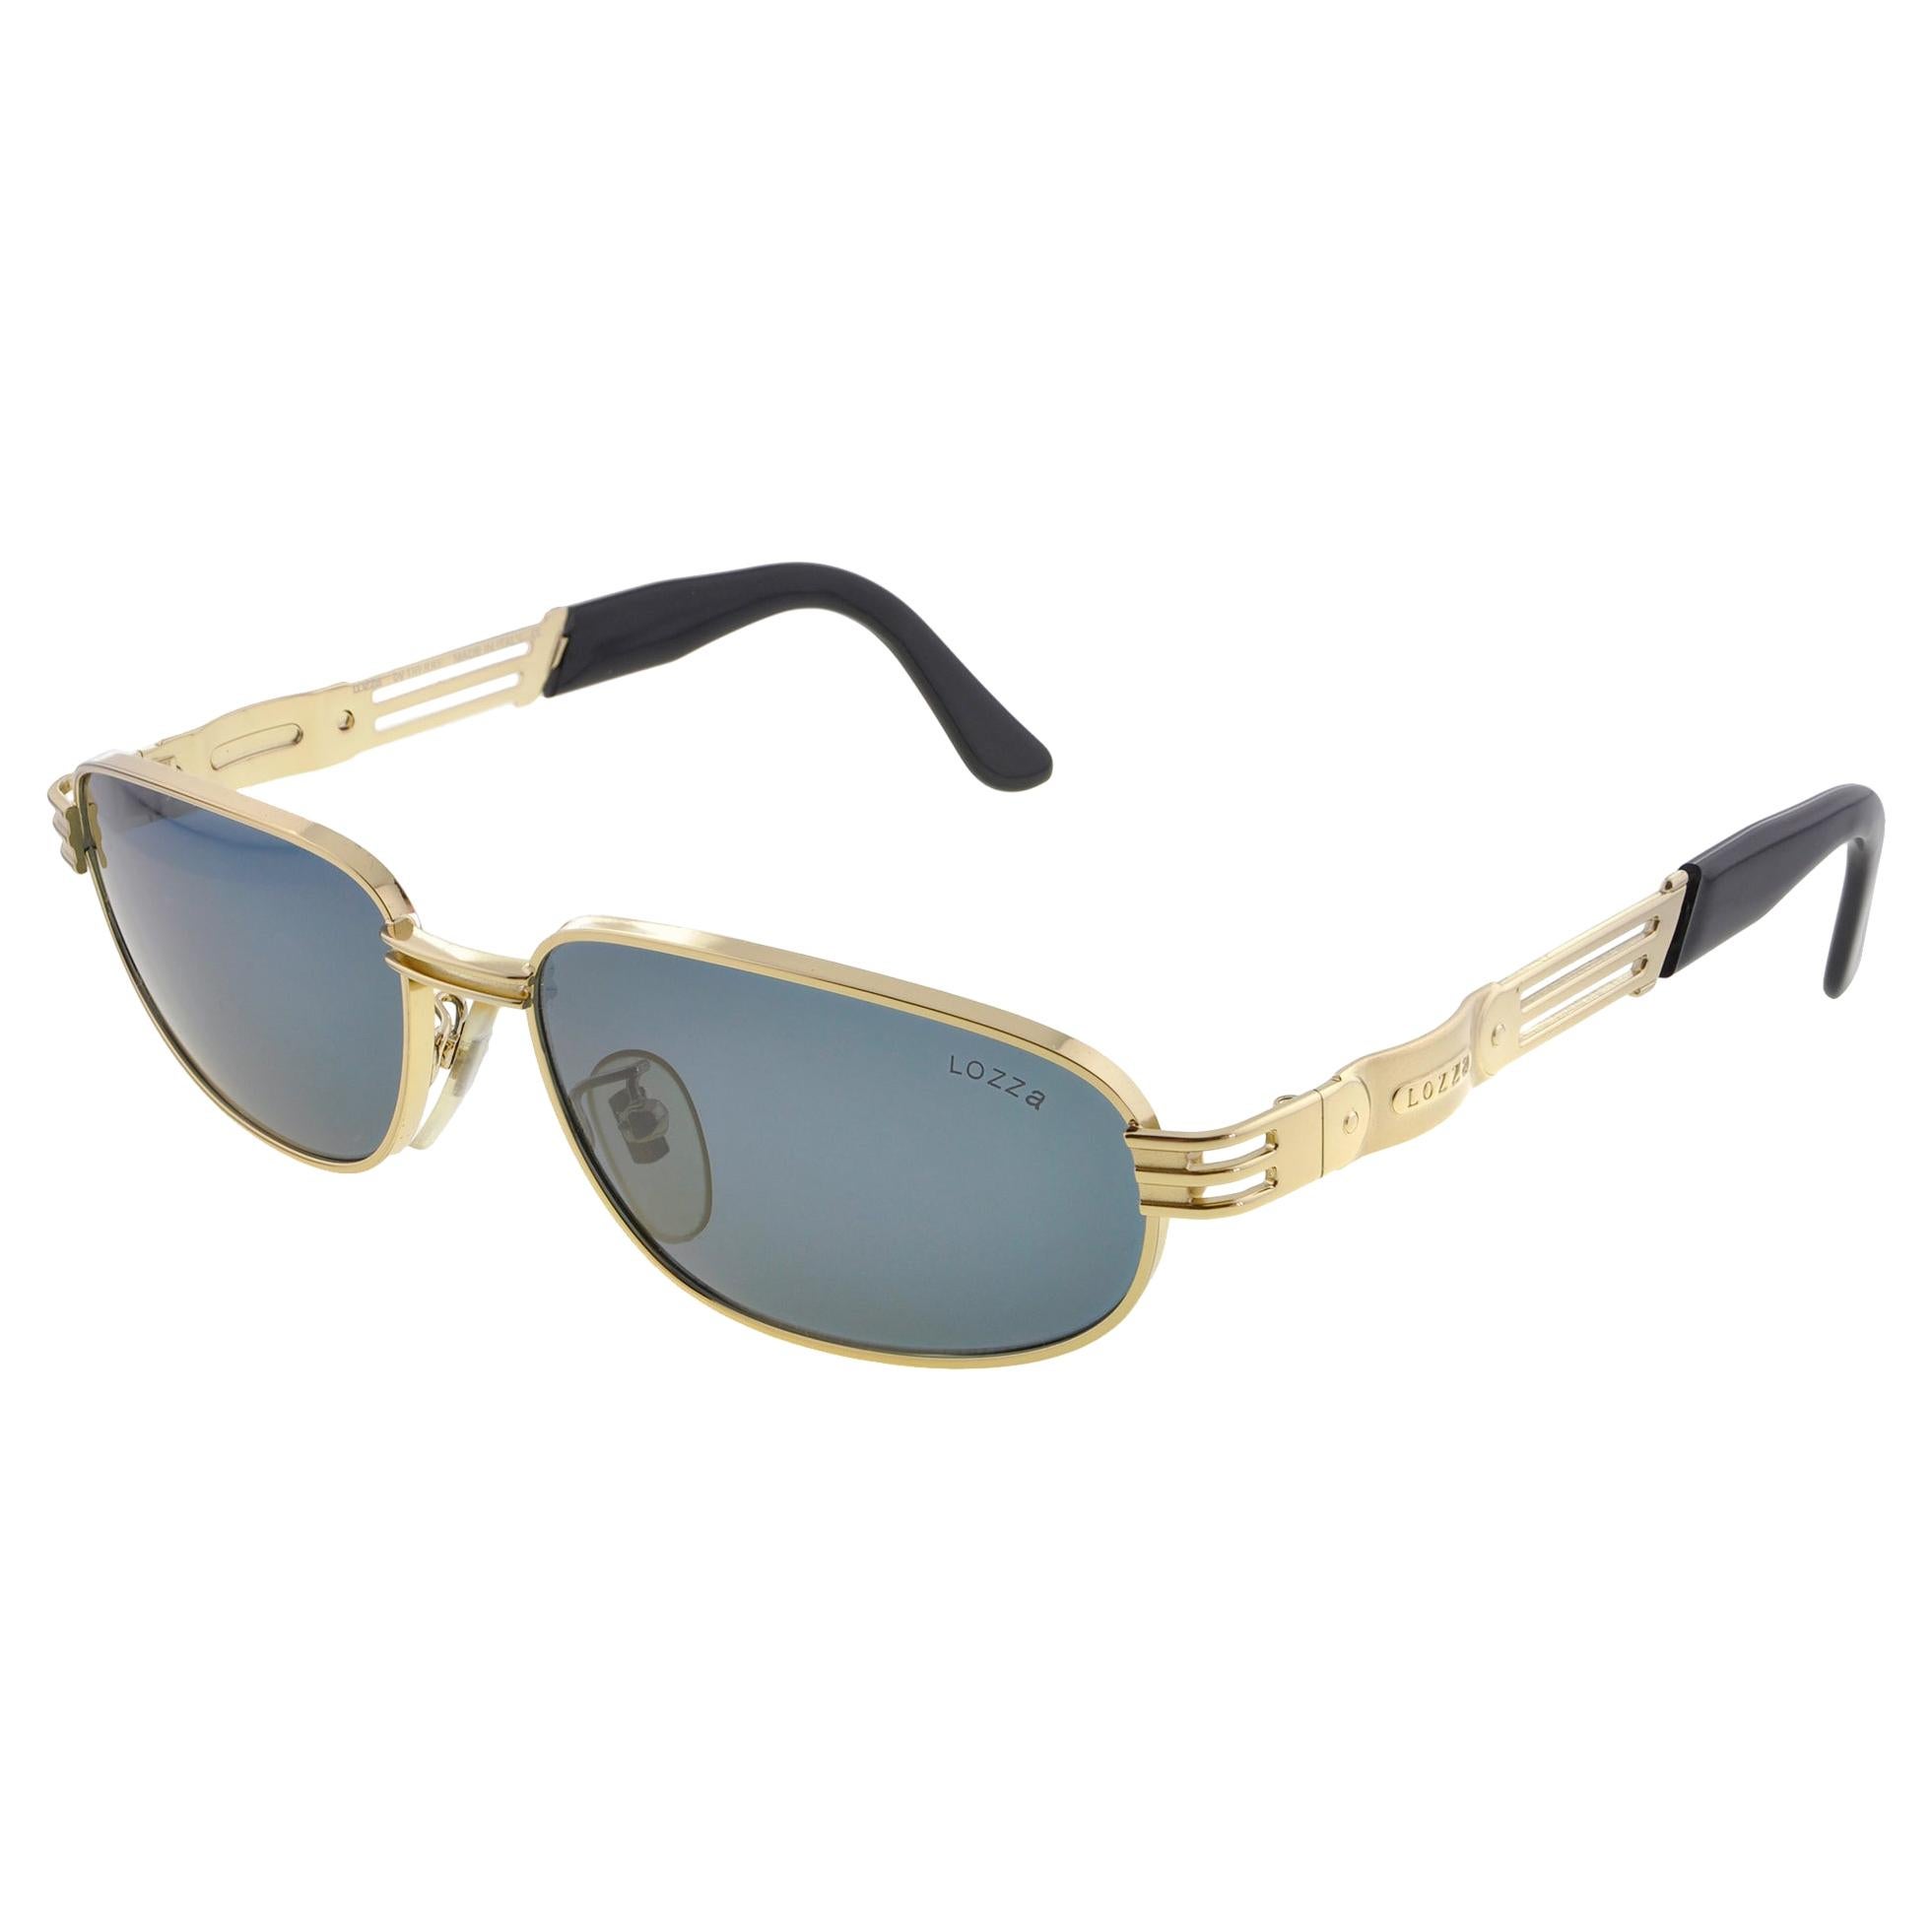 Lozza golden vintage sunglasses 80s